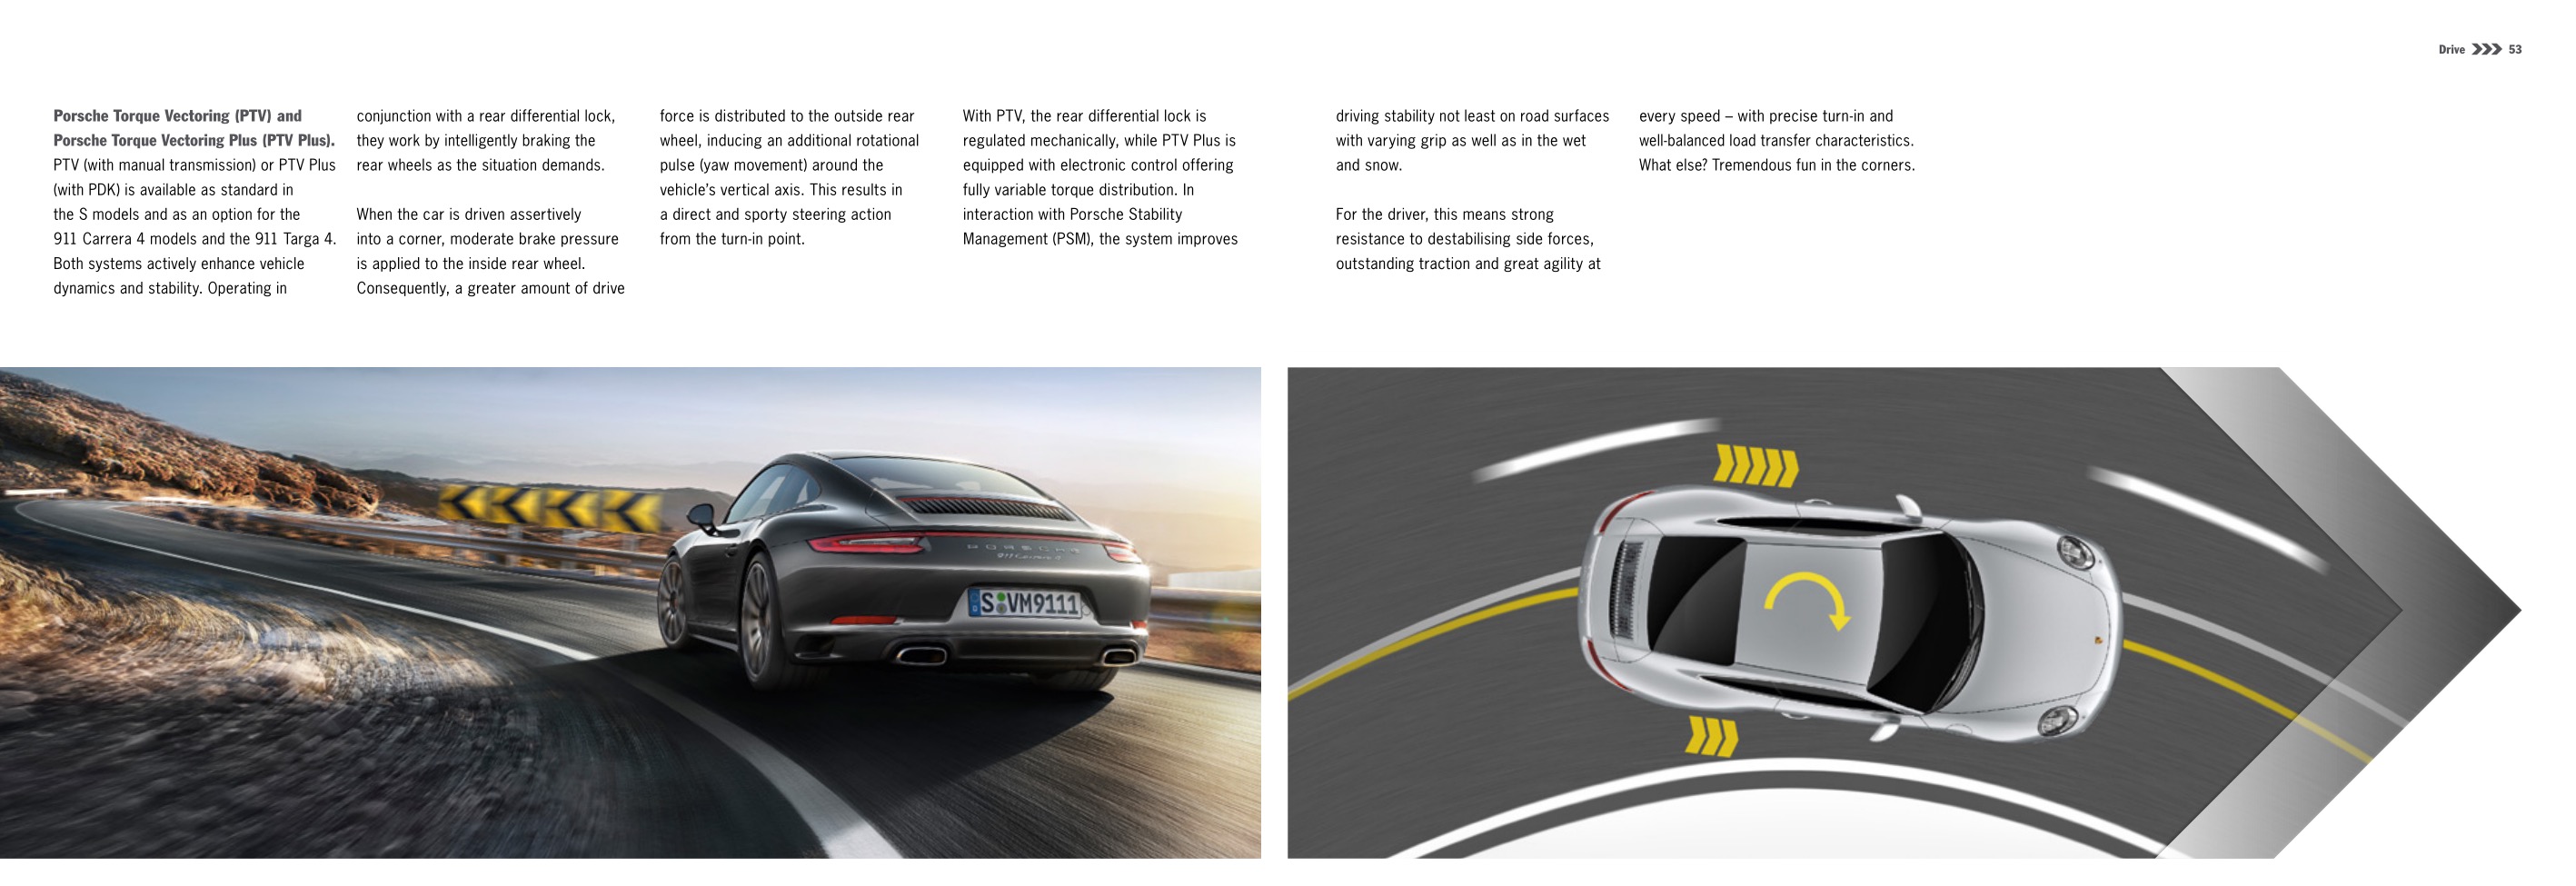 2017 Porsche 911 Brochure Page 39